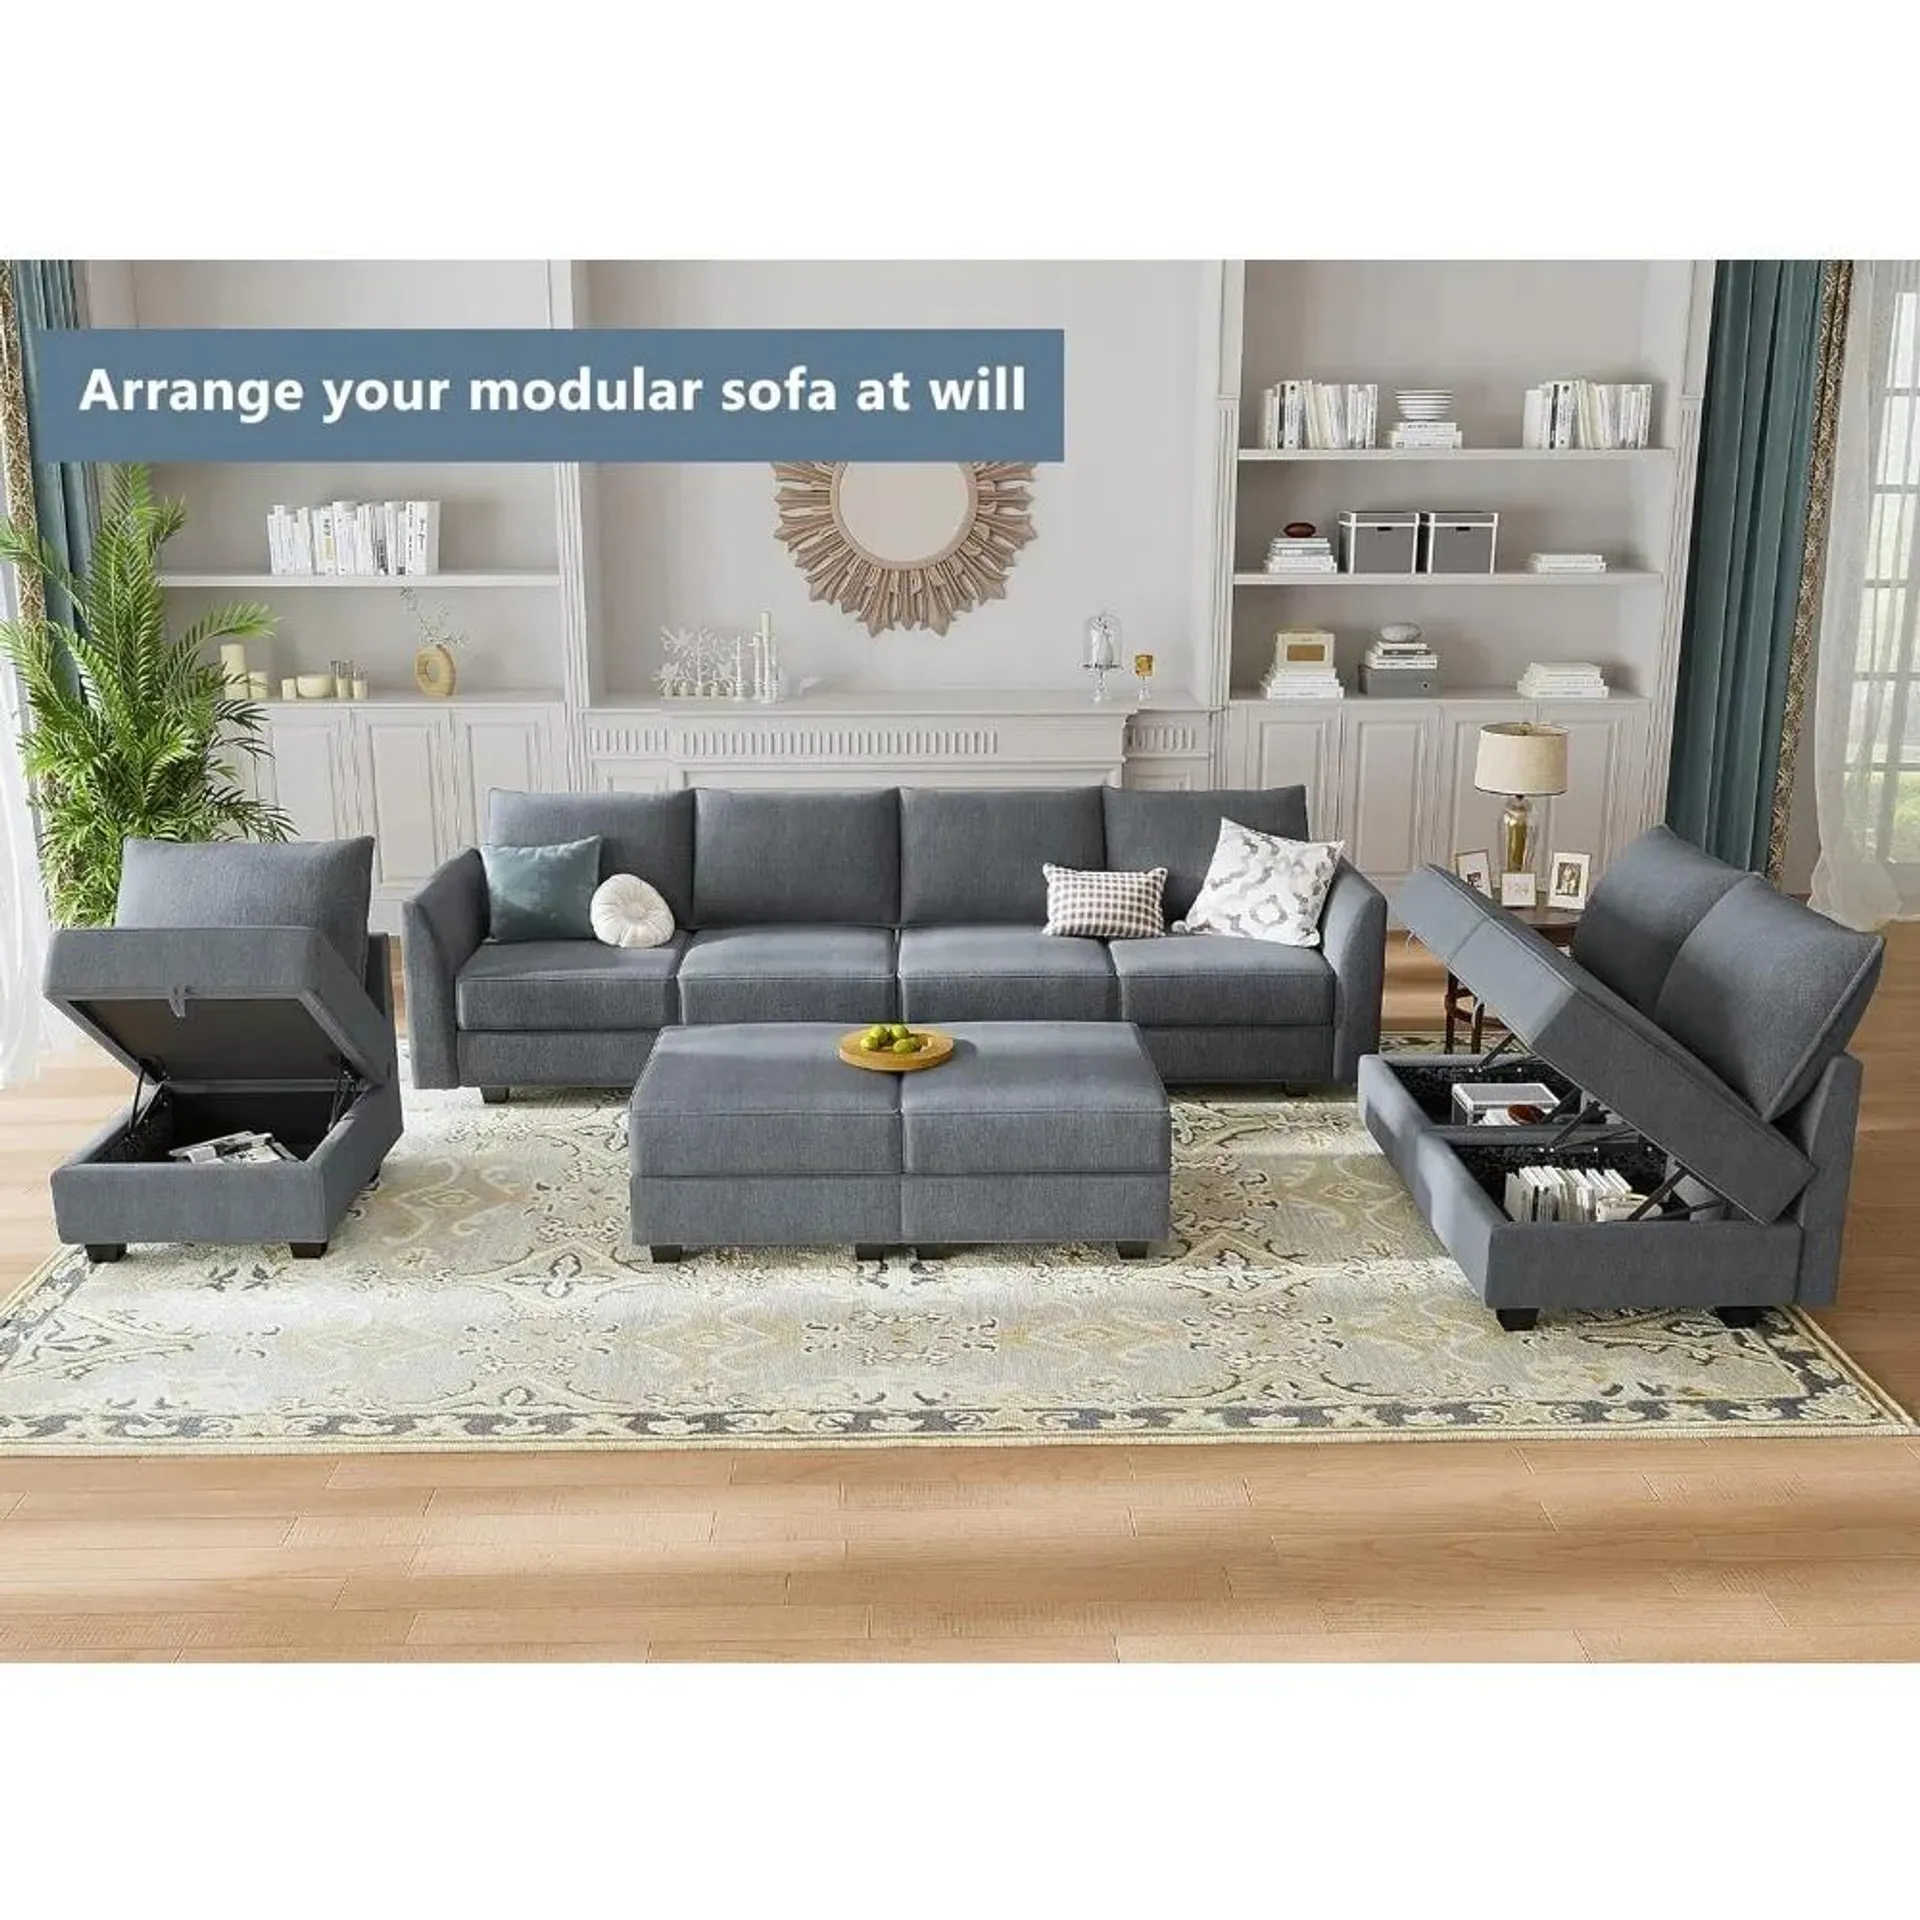 Living Room Sofa with Storage Seat Reversible, Oversized Sleeper Sectional Sofa Set, Modular Sectional Sleeper Sofa Bed